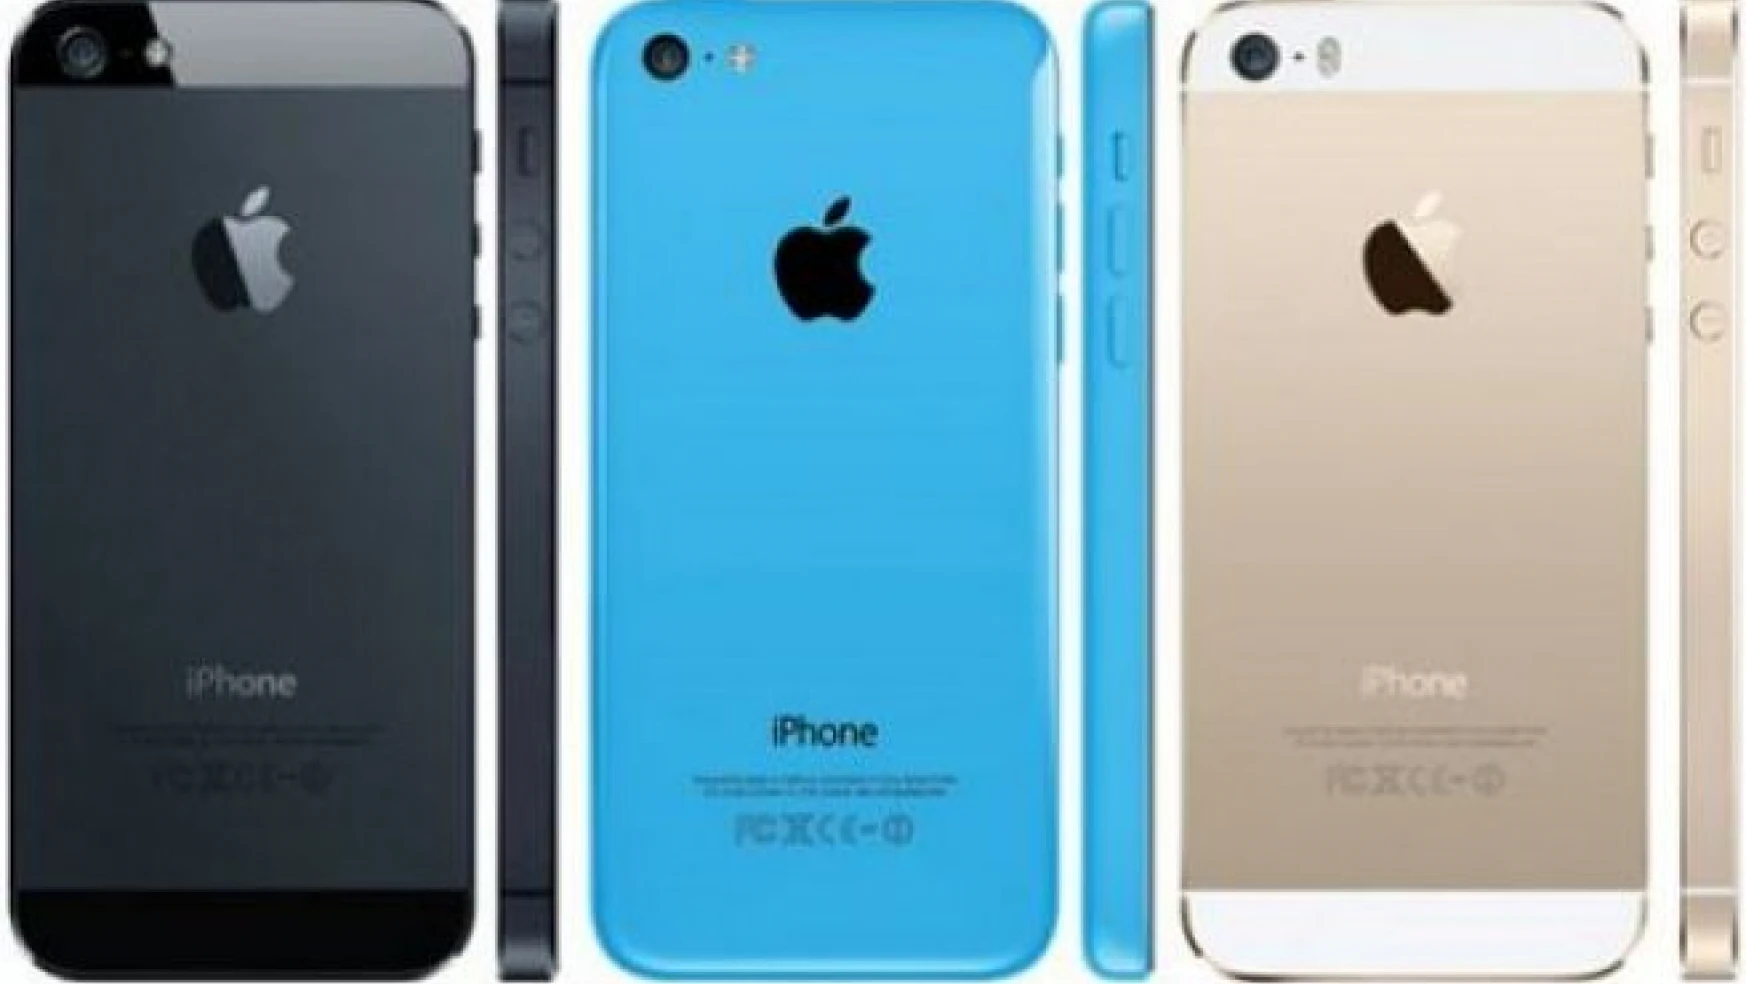 iPhone 5se (iPhone 6c), iPhone 5 ile yanyana!